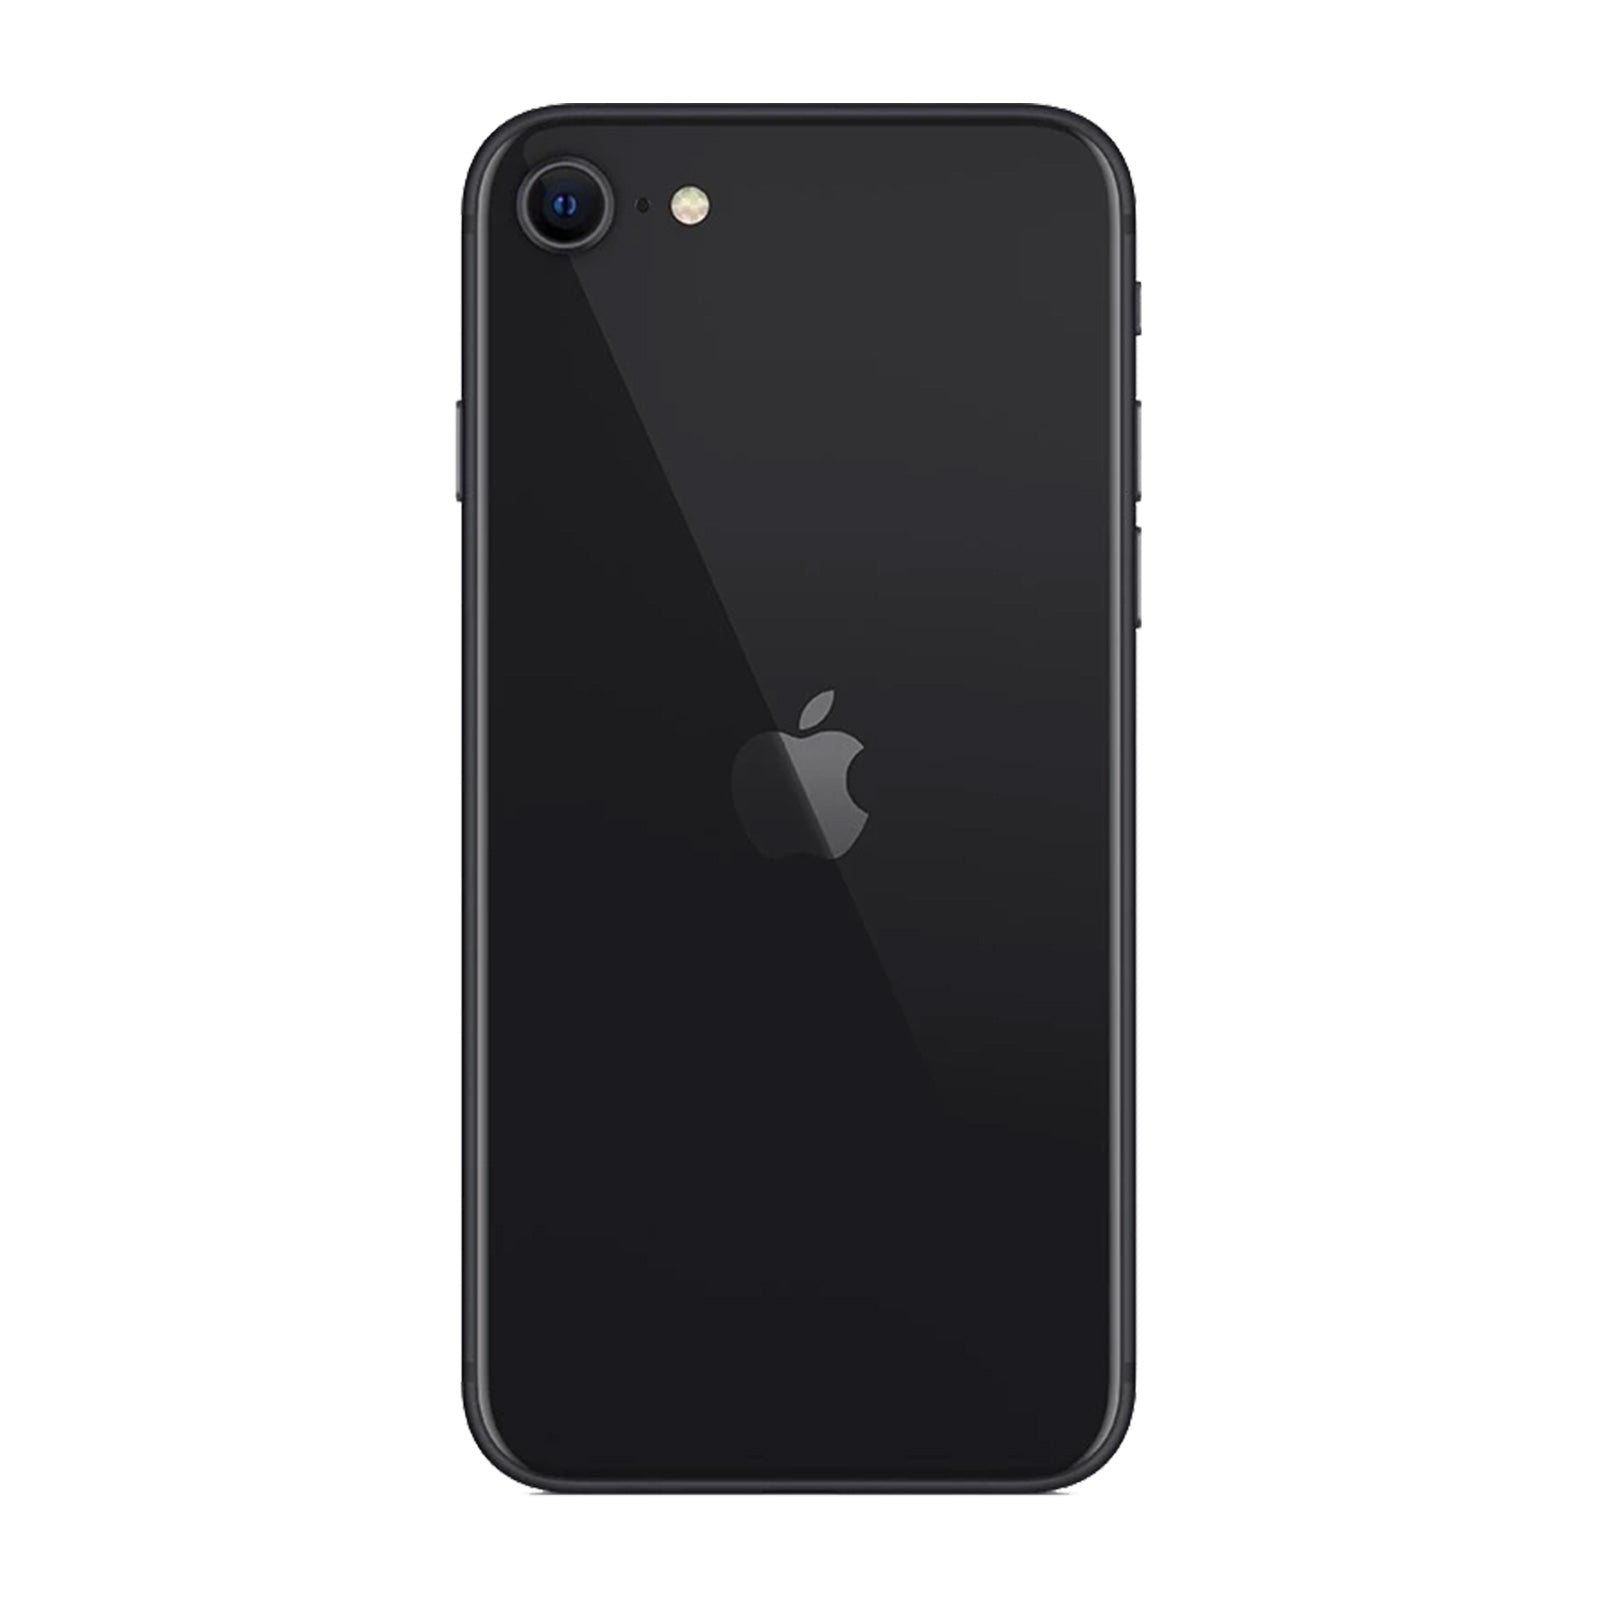 Apple iPhone SE 2nd Gen 64GB Black Fair Sprint